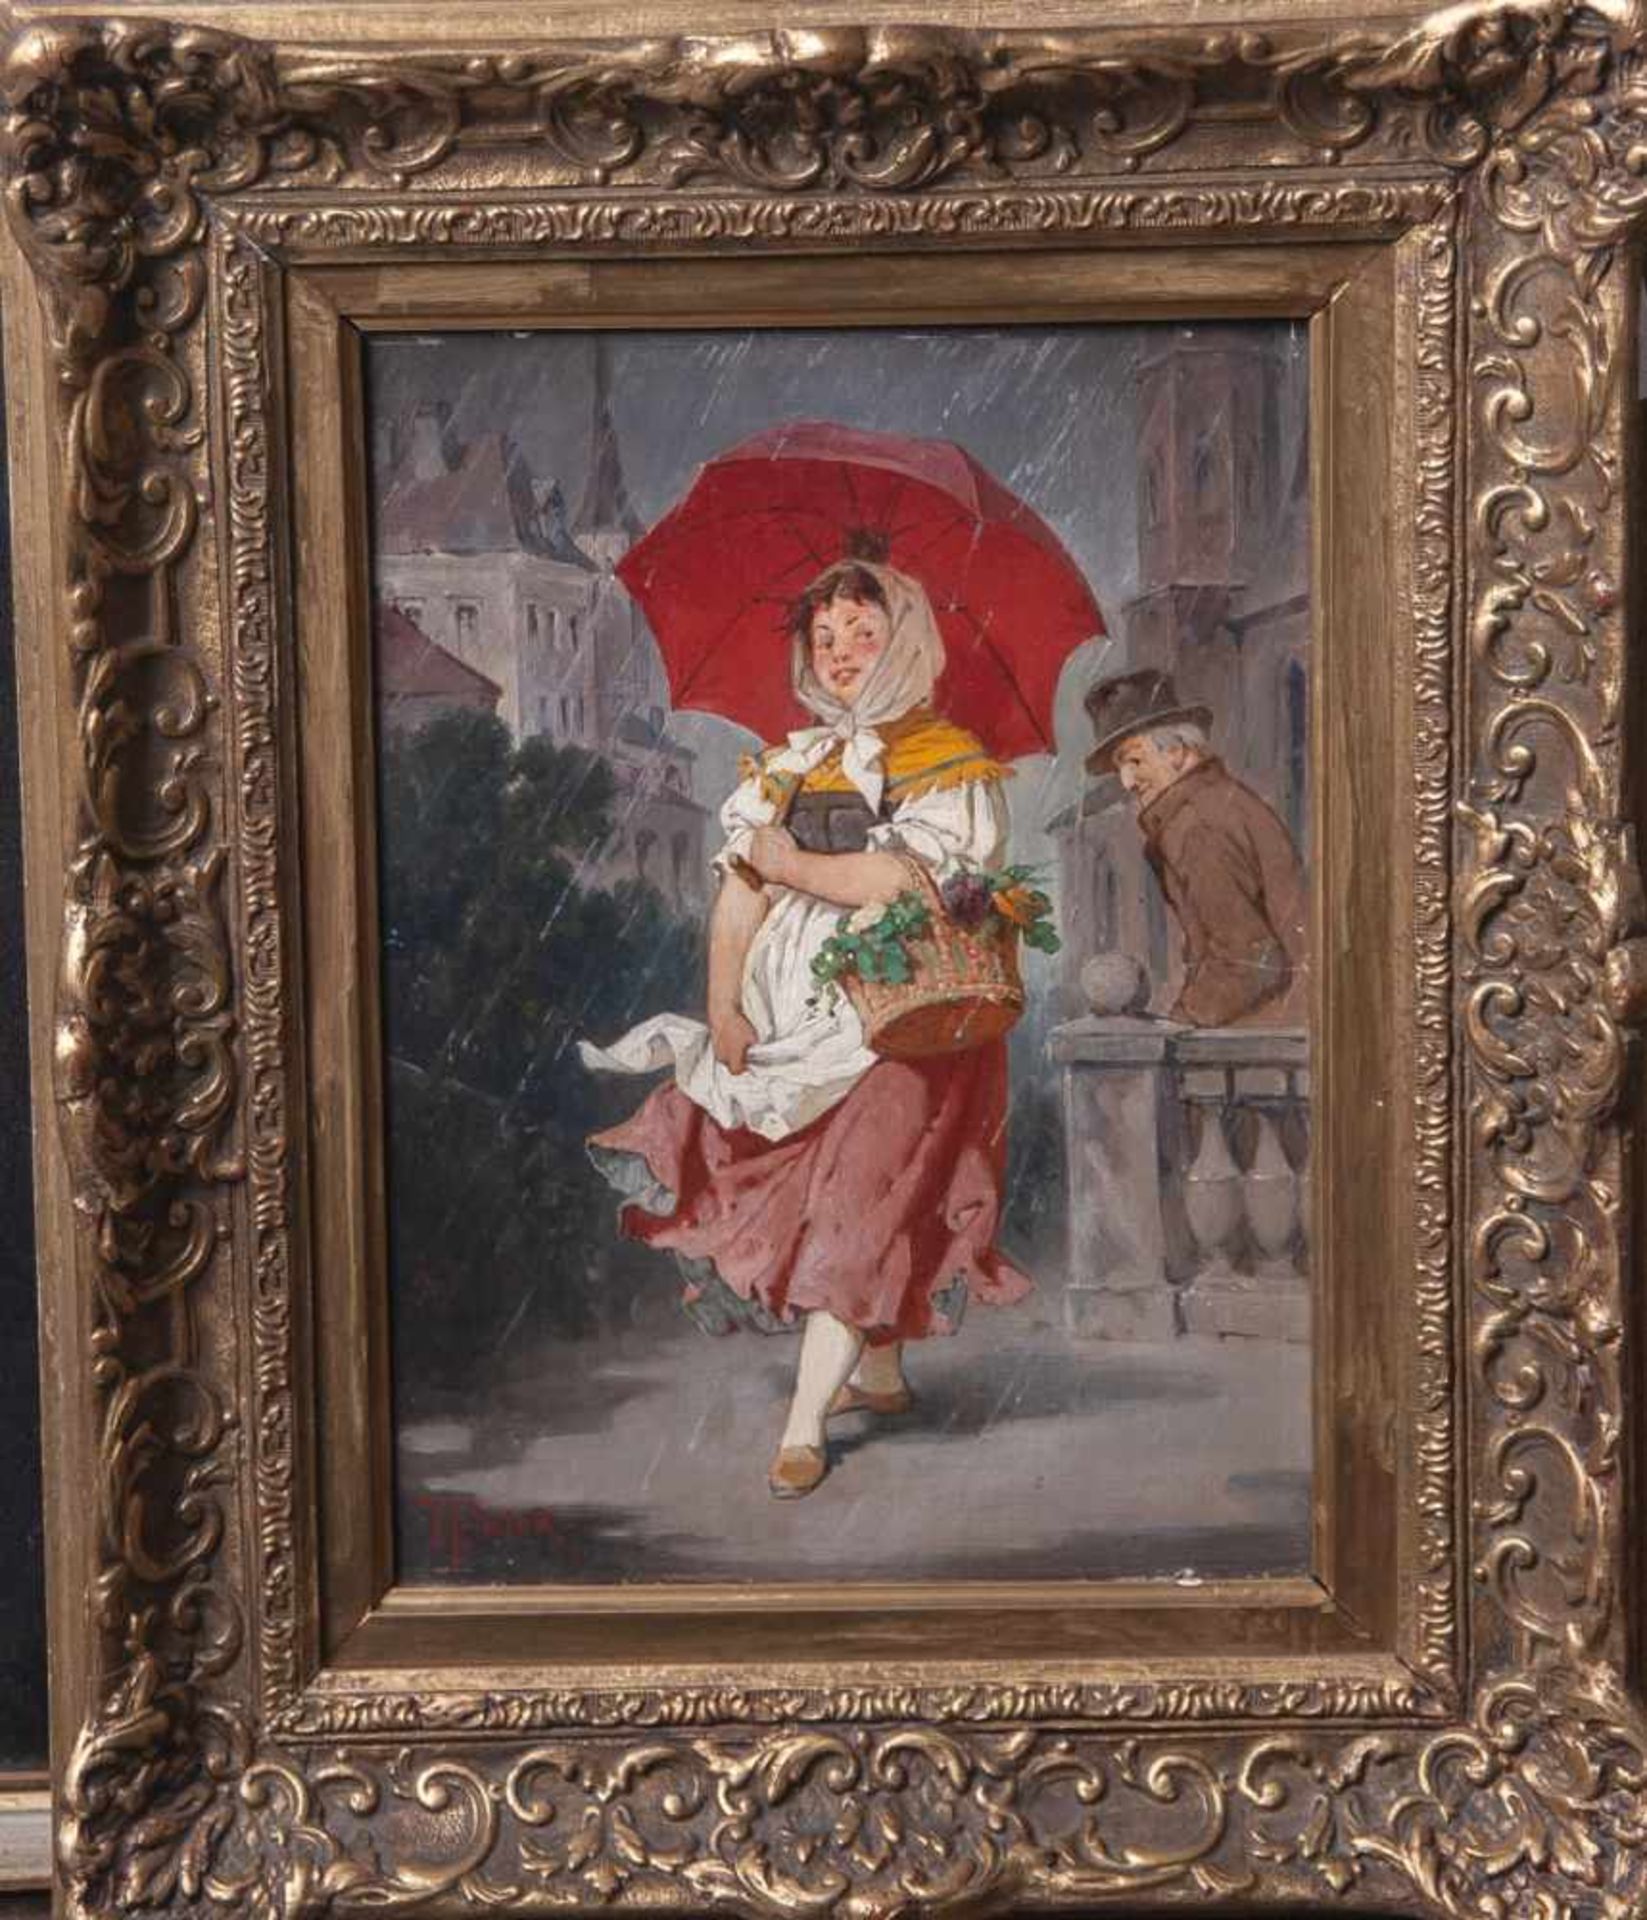 Patek, L. (19. Jahrhundert), Junge Blumenverkäuferin im Regen mit rotem Regenschirm,Öl/Holz, li.